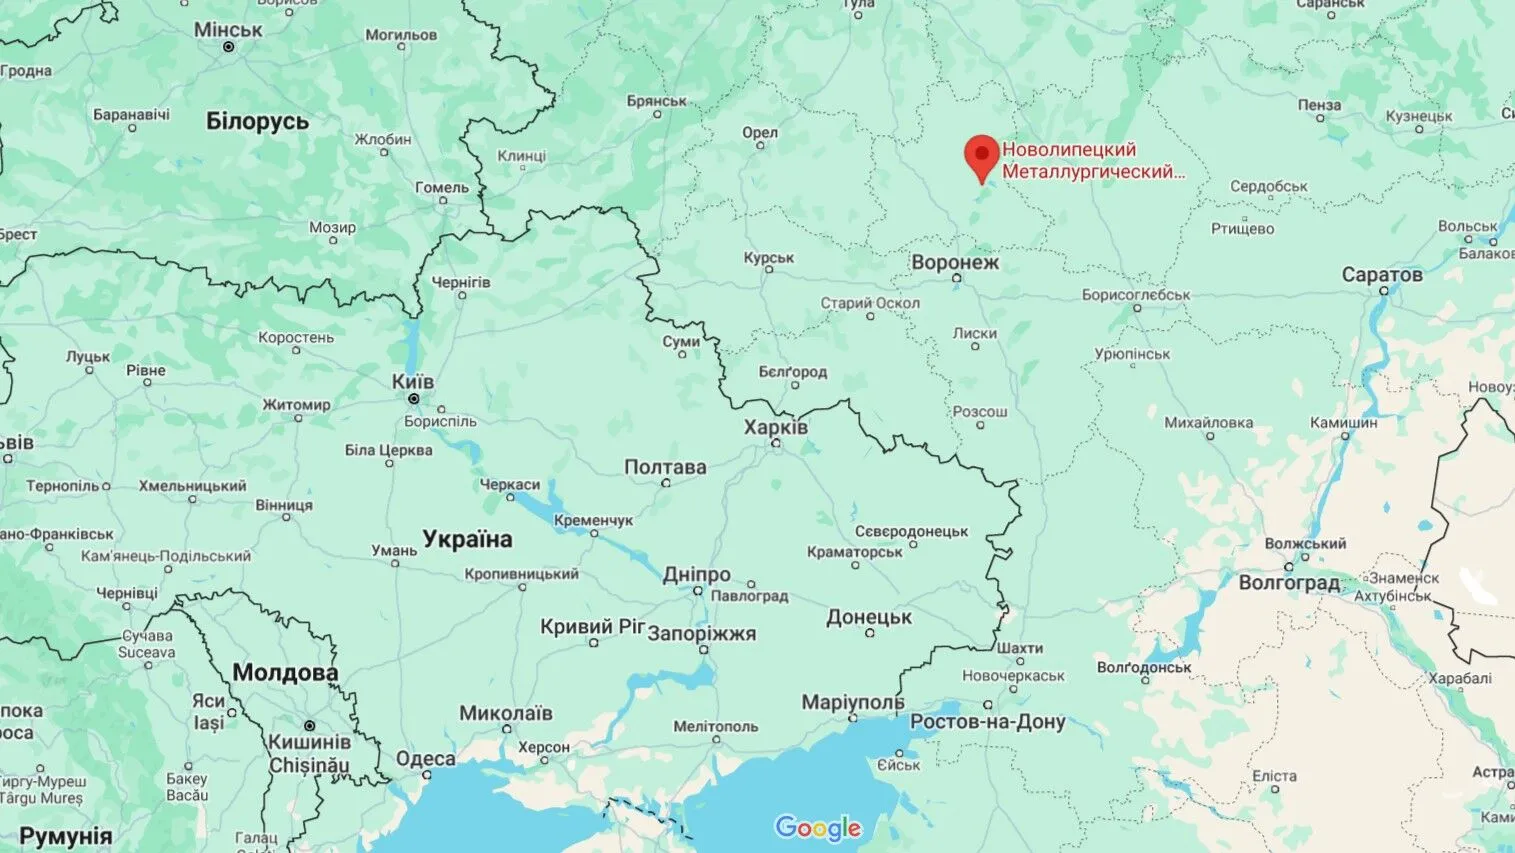 Russia says UAVs attacked Novolipetsk Metallurgical Plant